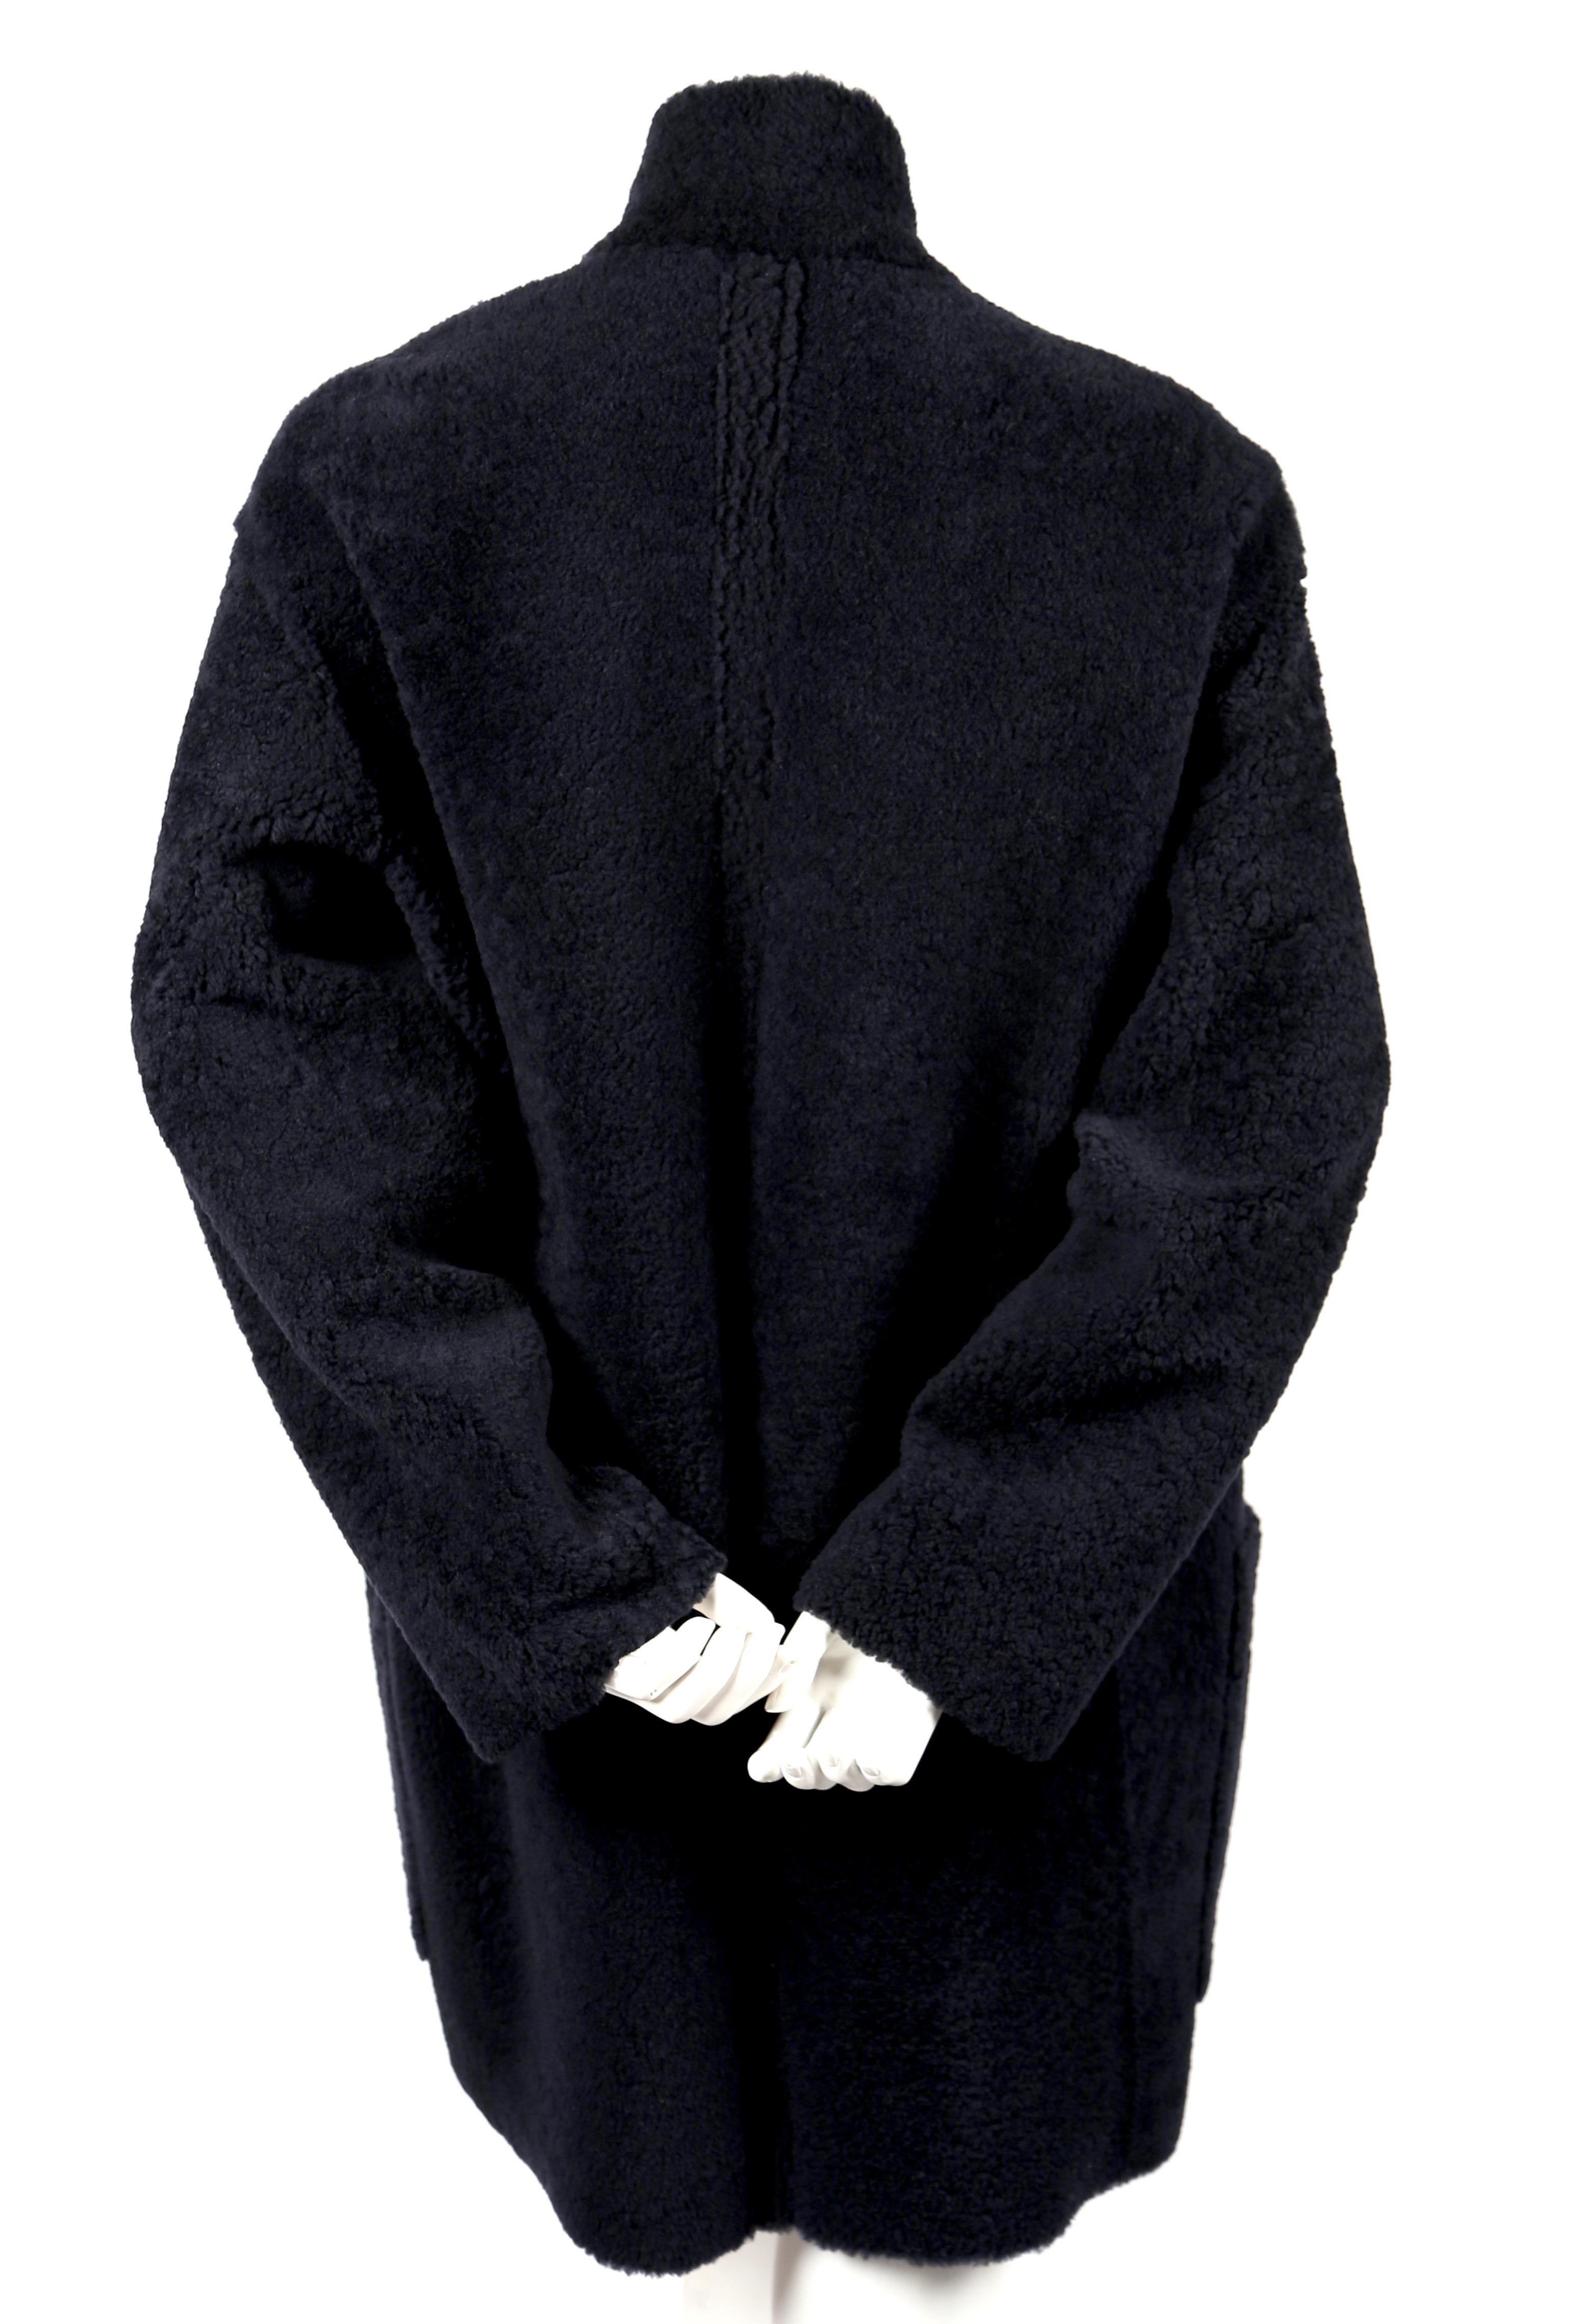 phoebe philo shearling coat